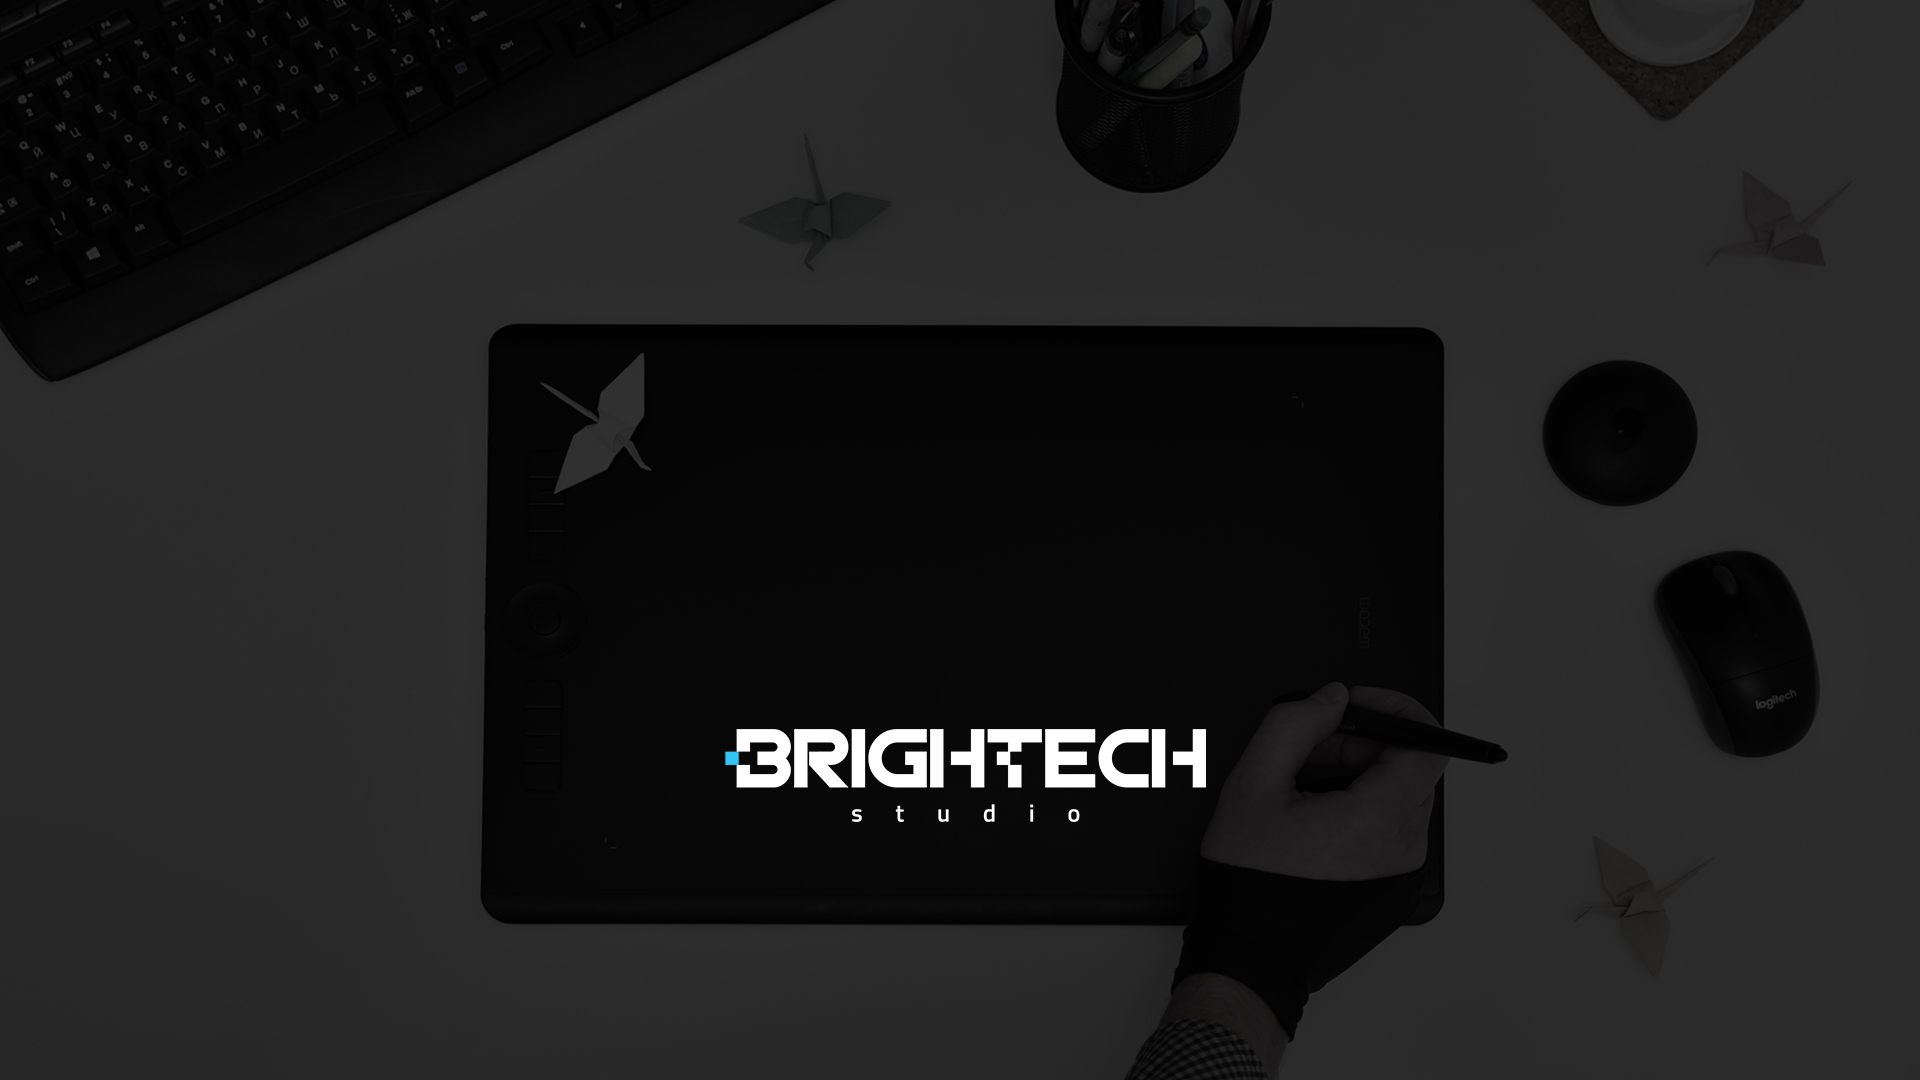 Brightech studio